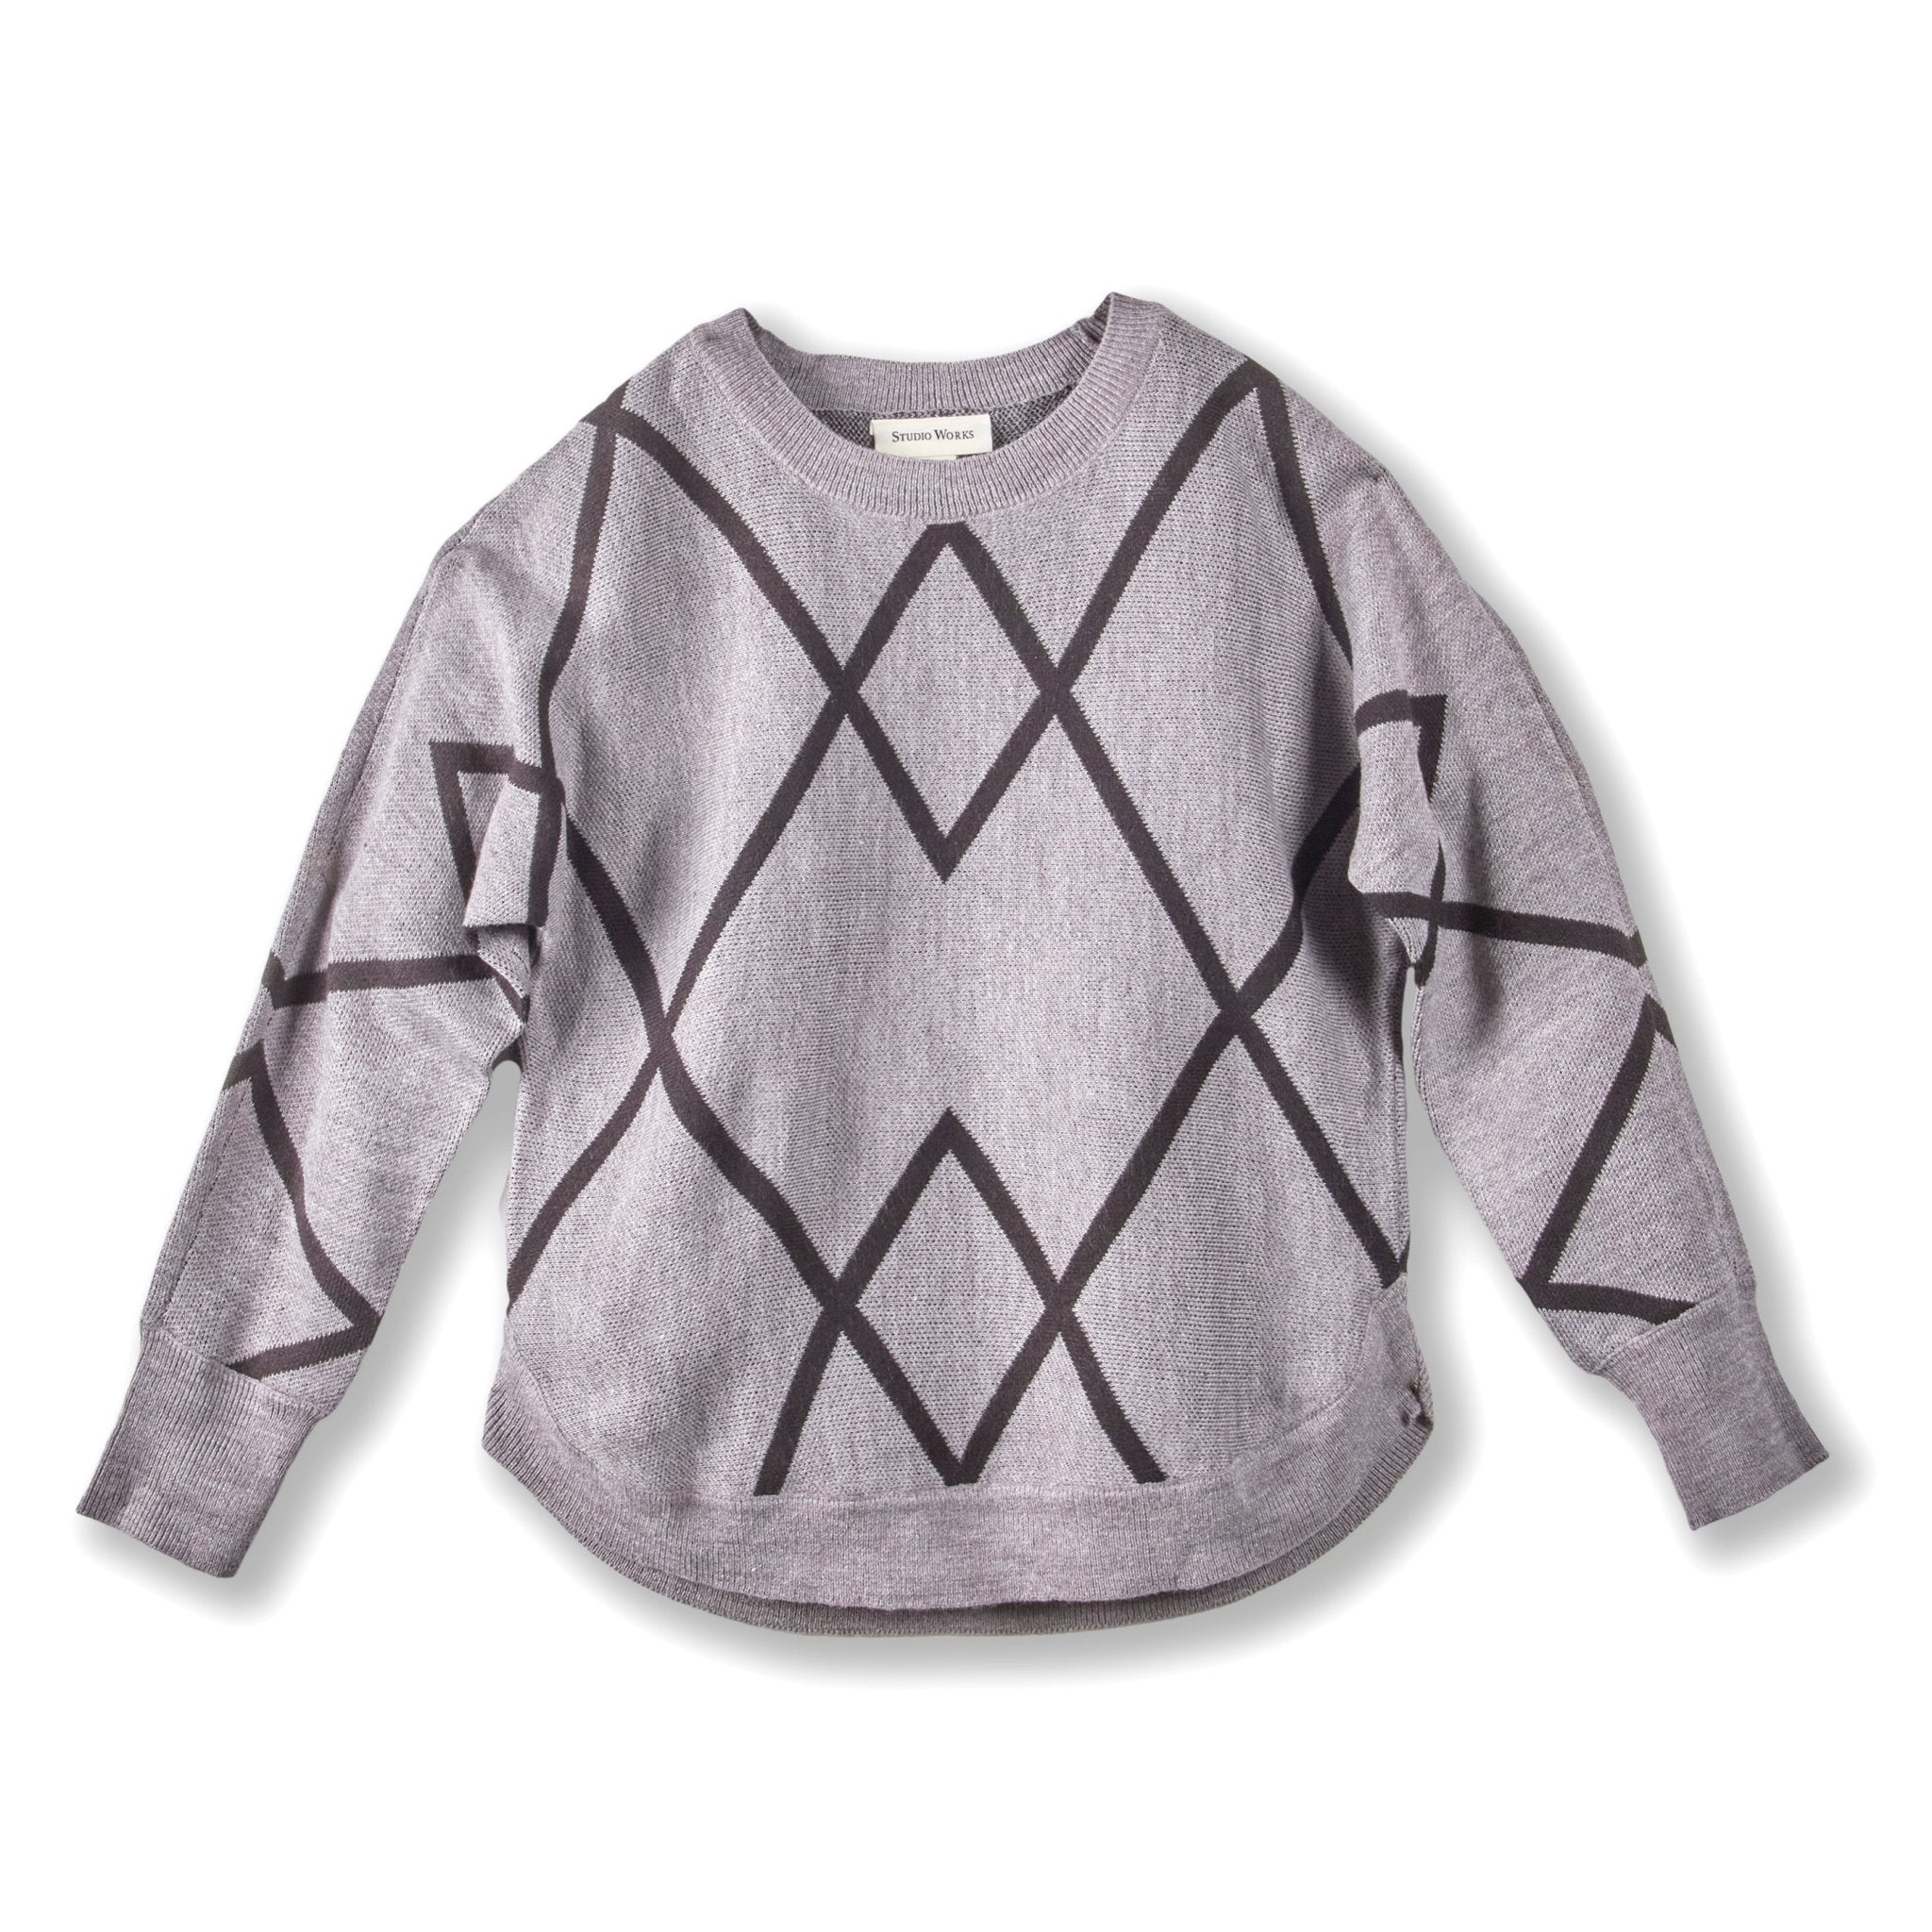 PMUYBHF Female Sweater Dress Women Heart Supplier Long Sleeve Womens  Pullneck Tops for Women Girls Sweater S